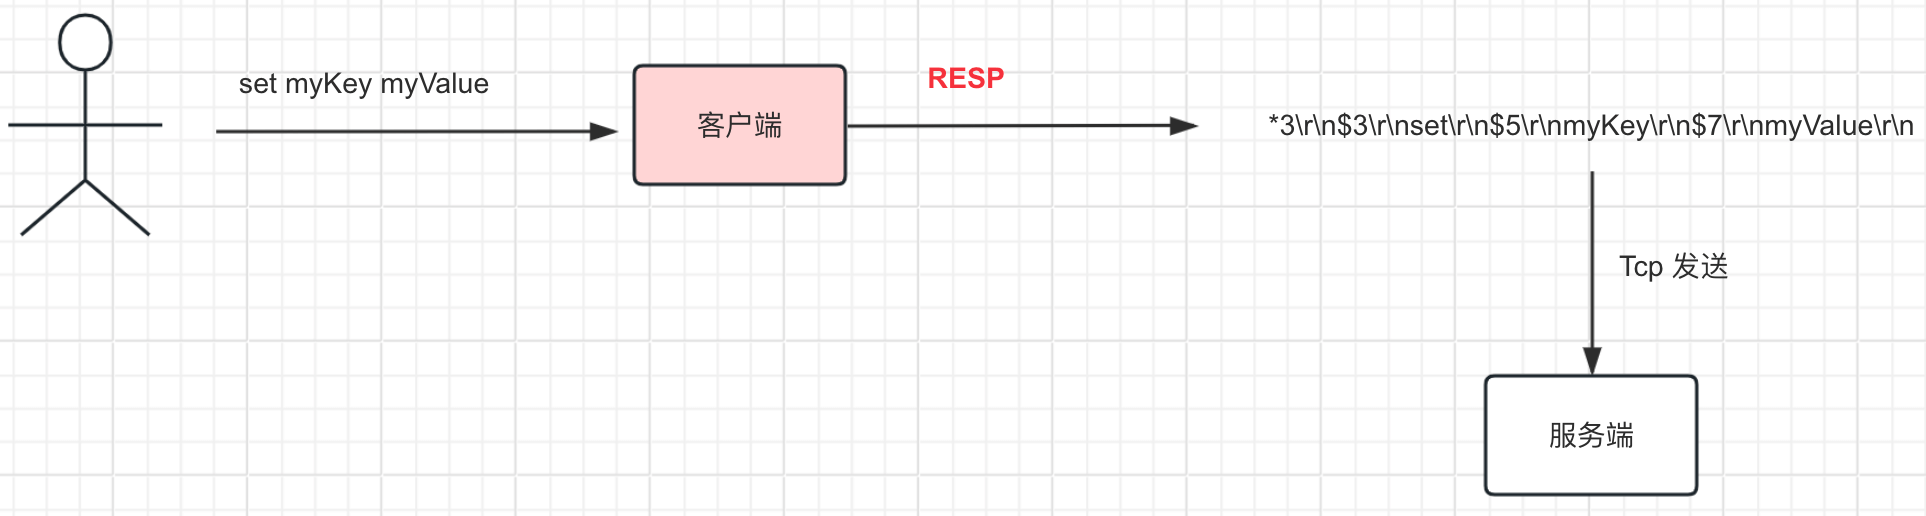 Alt 'Redis 客户端按照 RESP 协议转换发送请求'